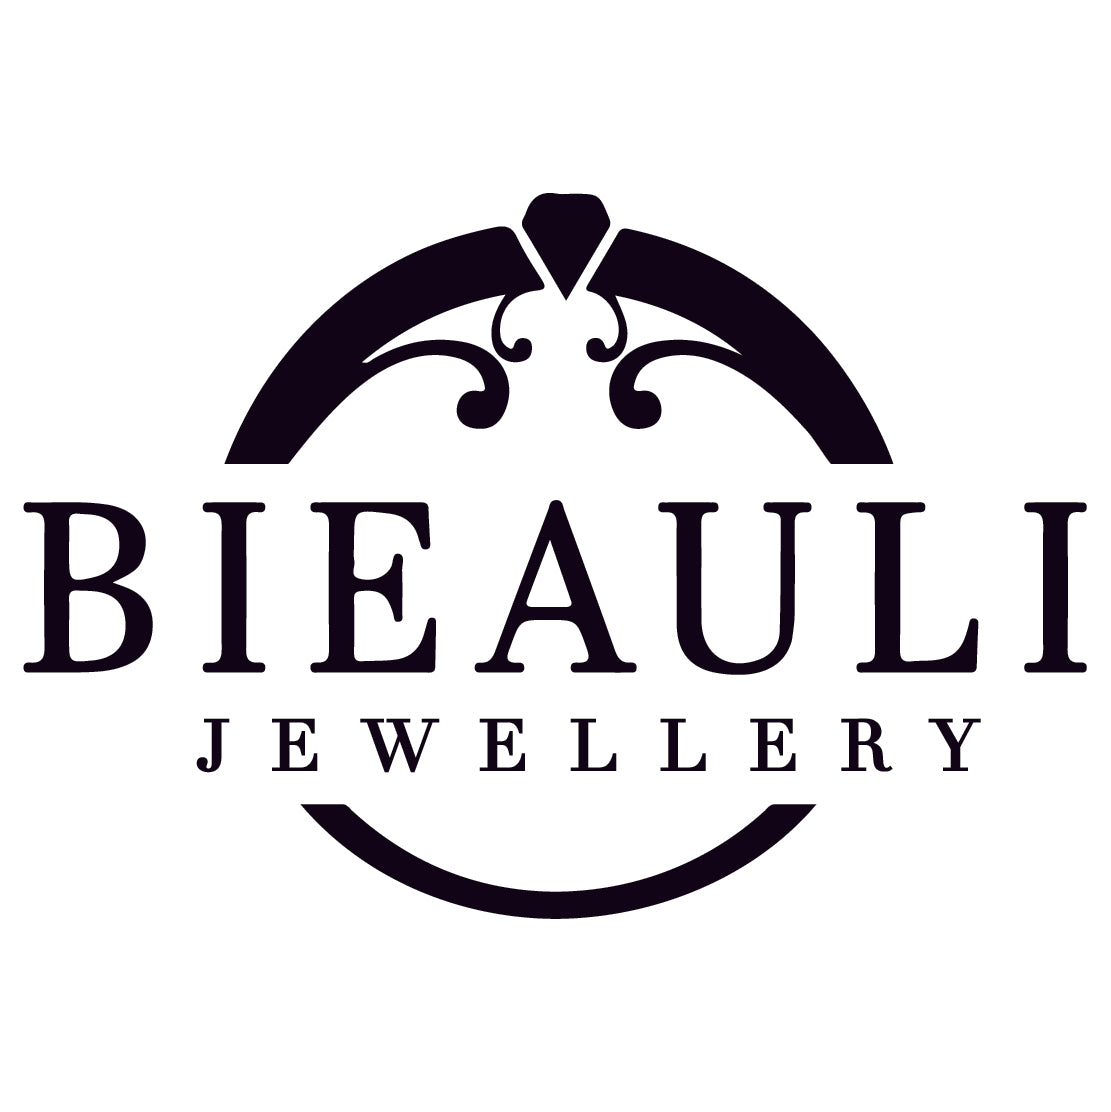 Bieauli Jewellery London